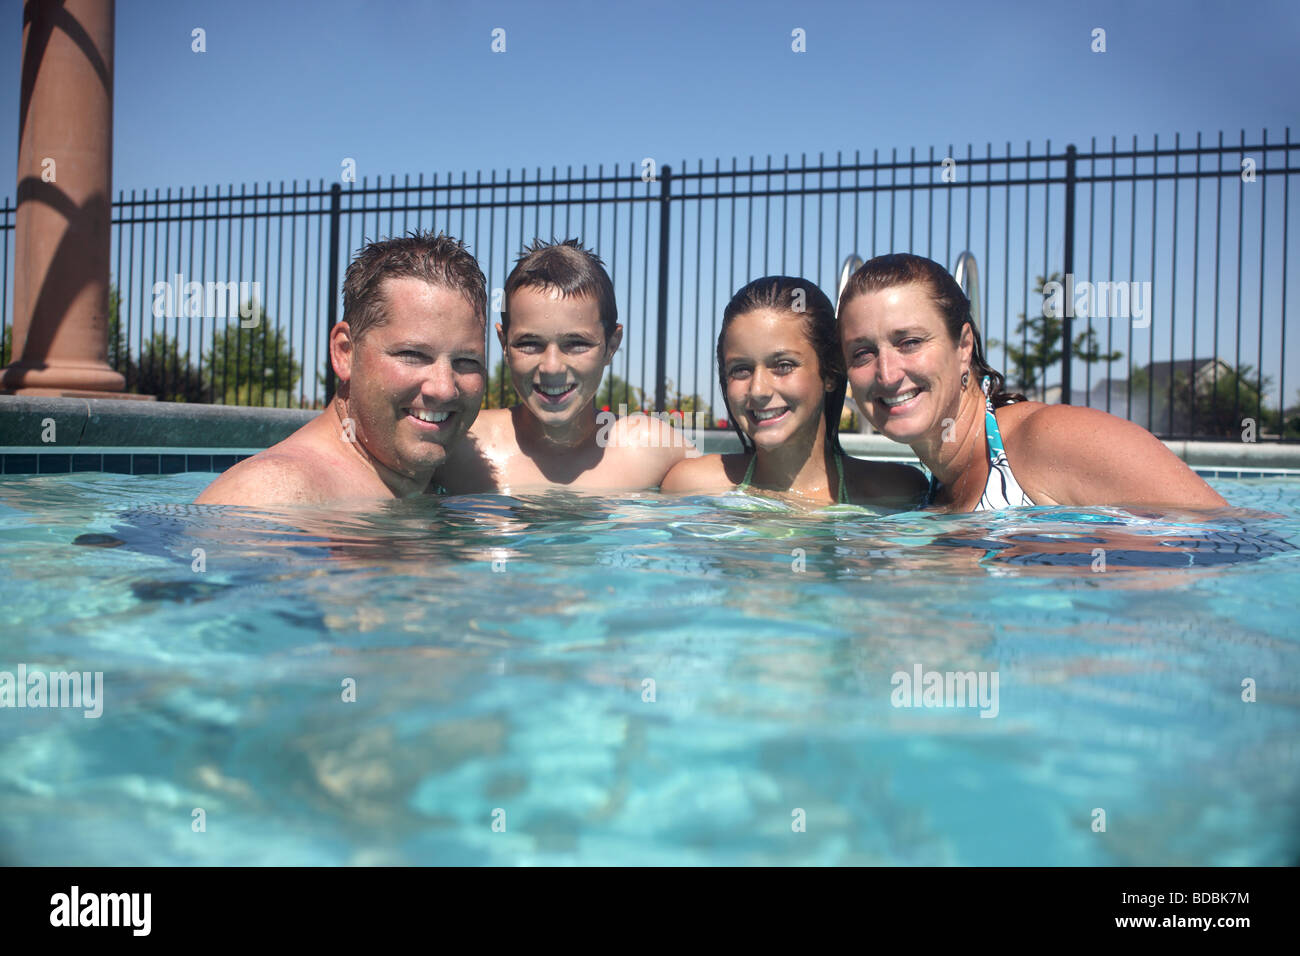 Family portrait in pool Stock Photo